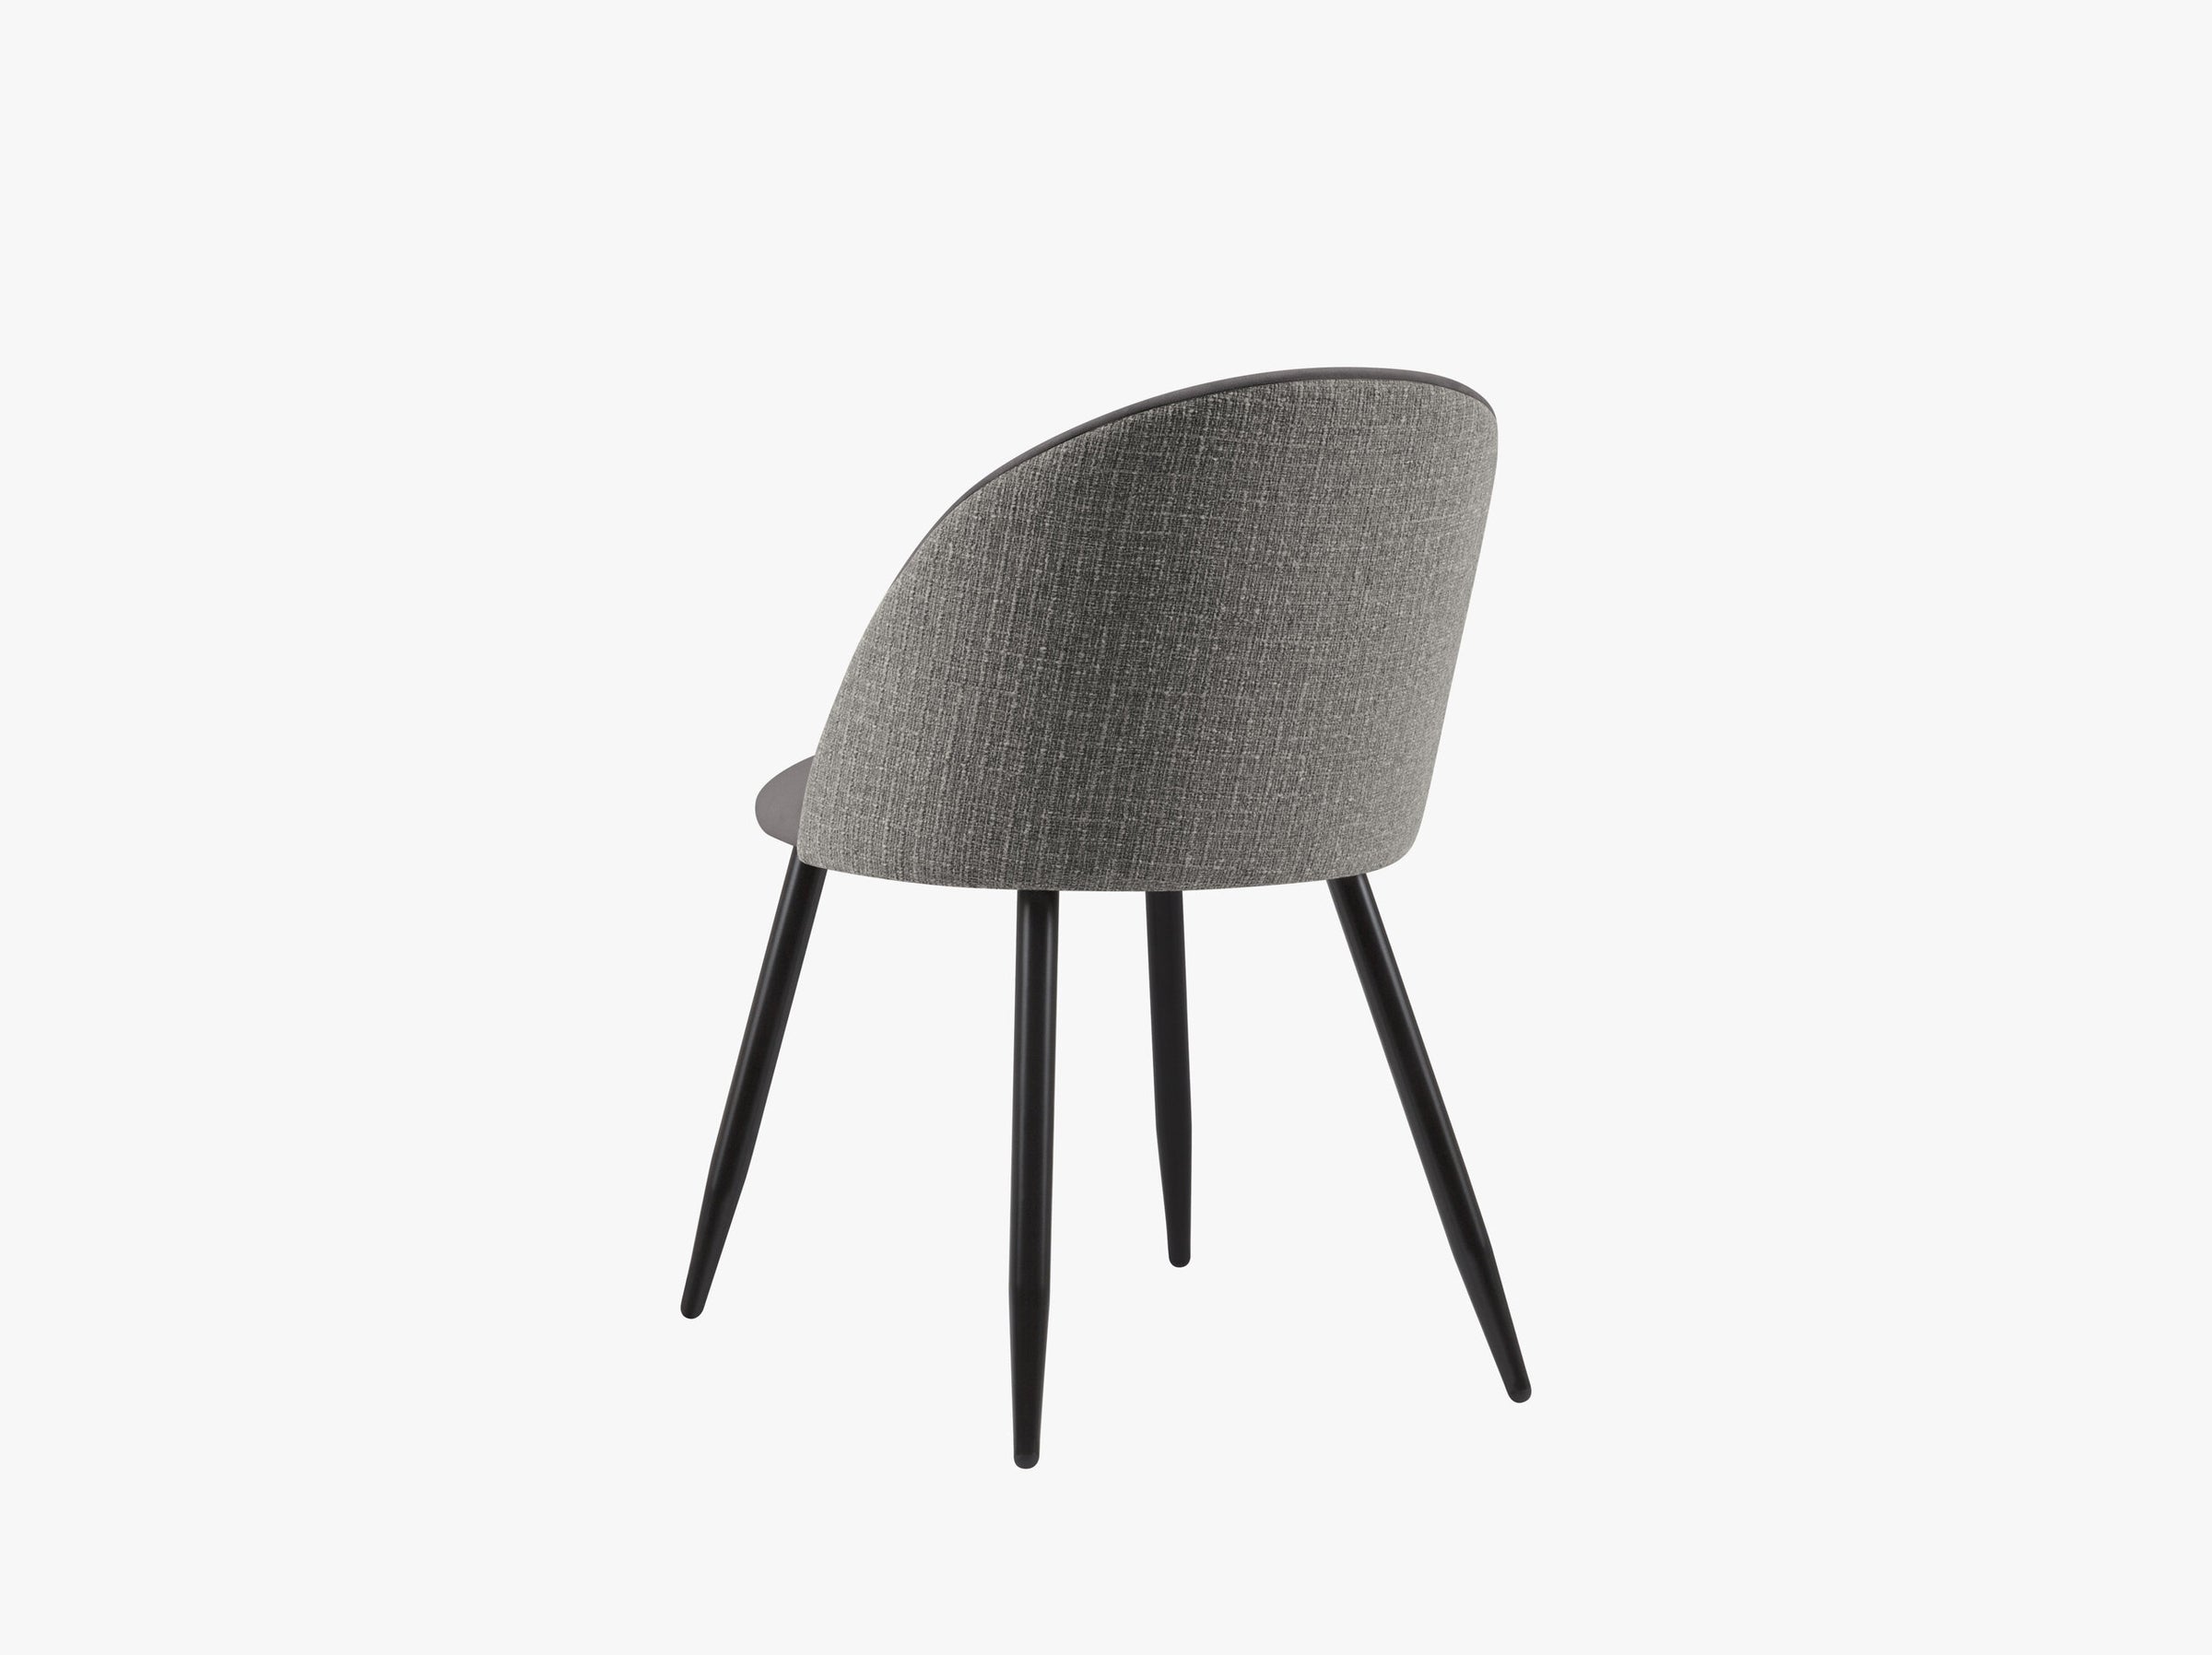 Rayan tables & chairs velvet dark grey